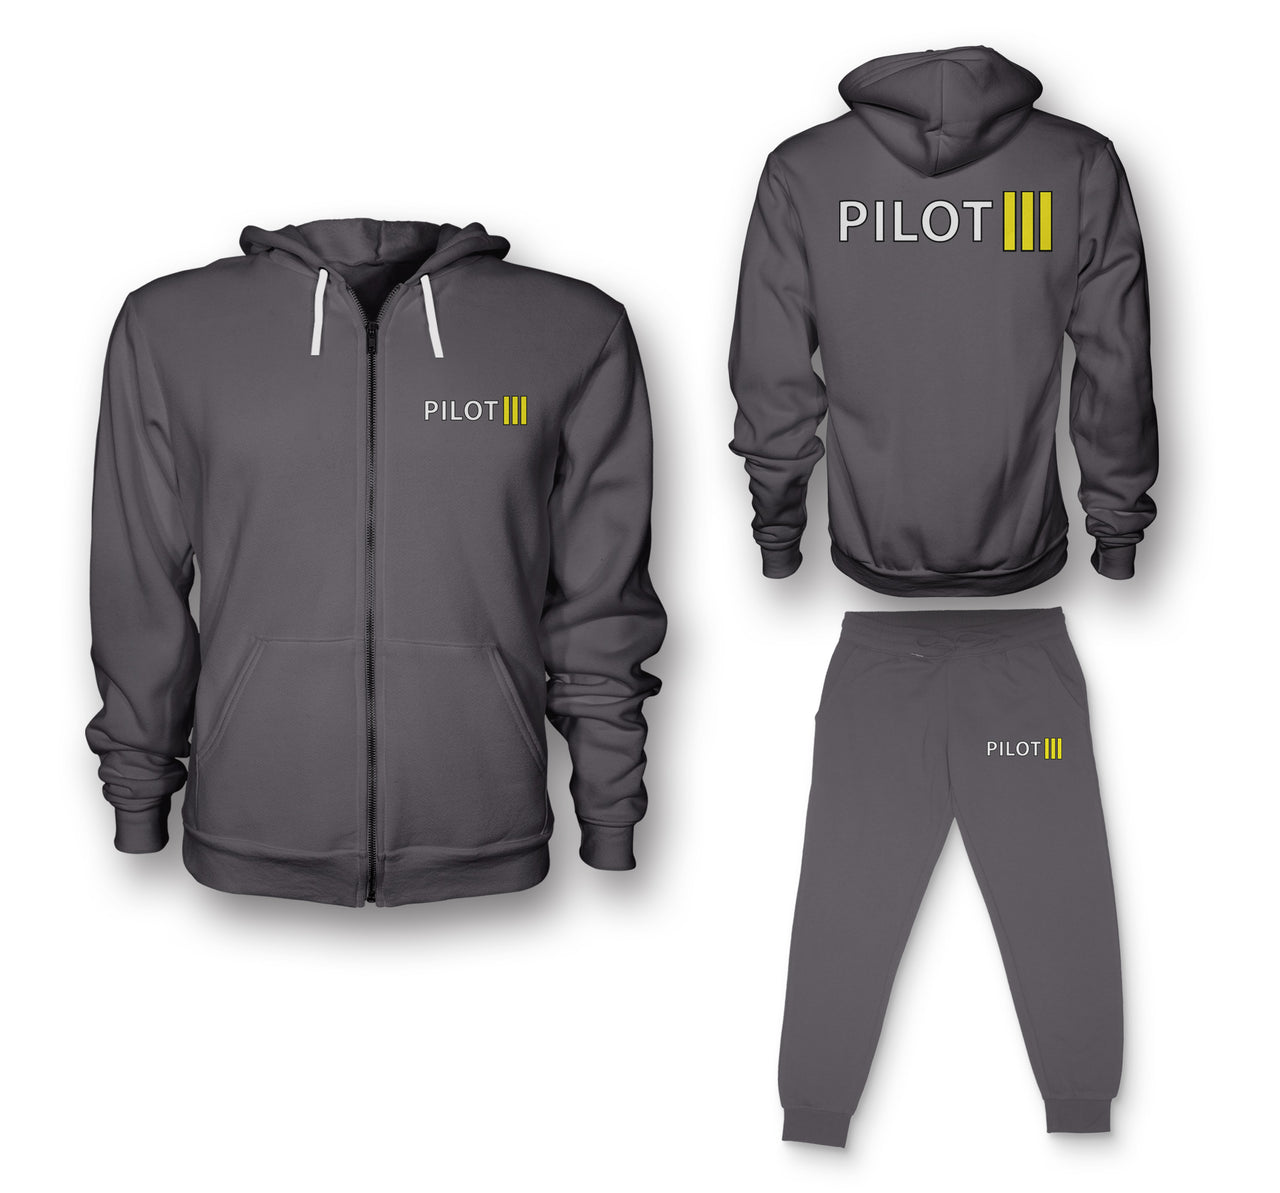 Pilot & Stripes (3 Lines) Designed Zipped Hoodies & Sweatpants Set